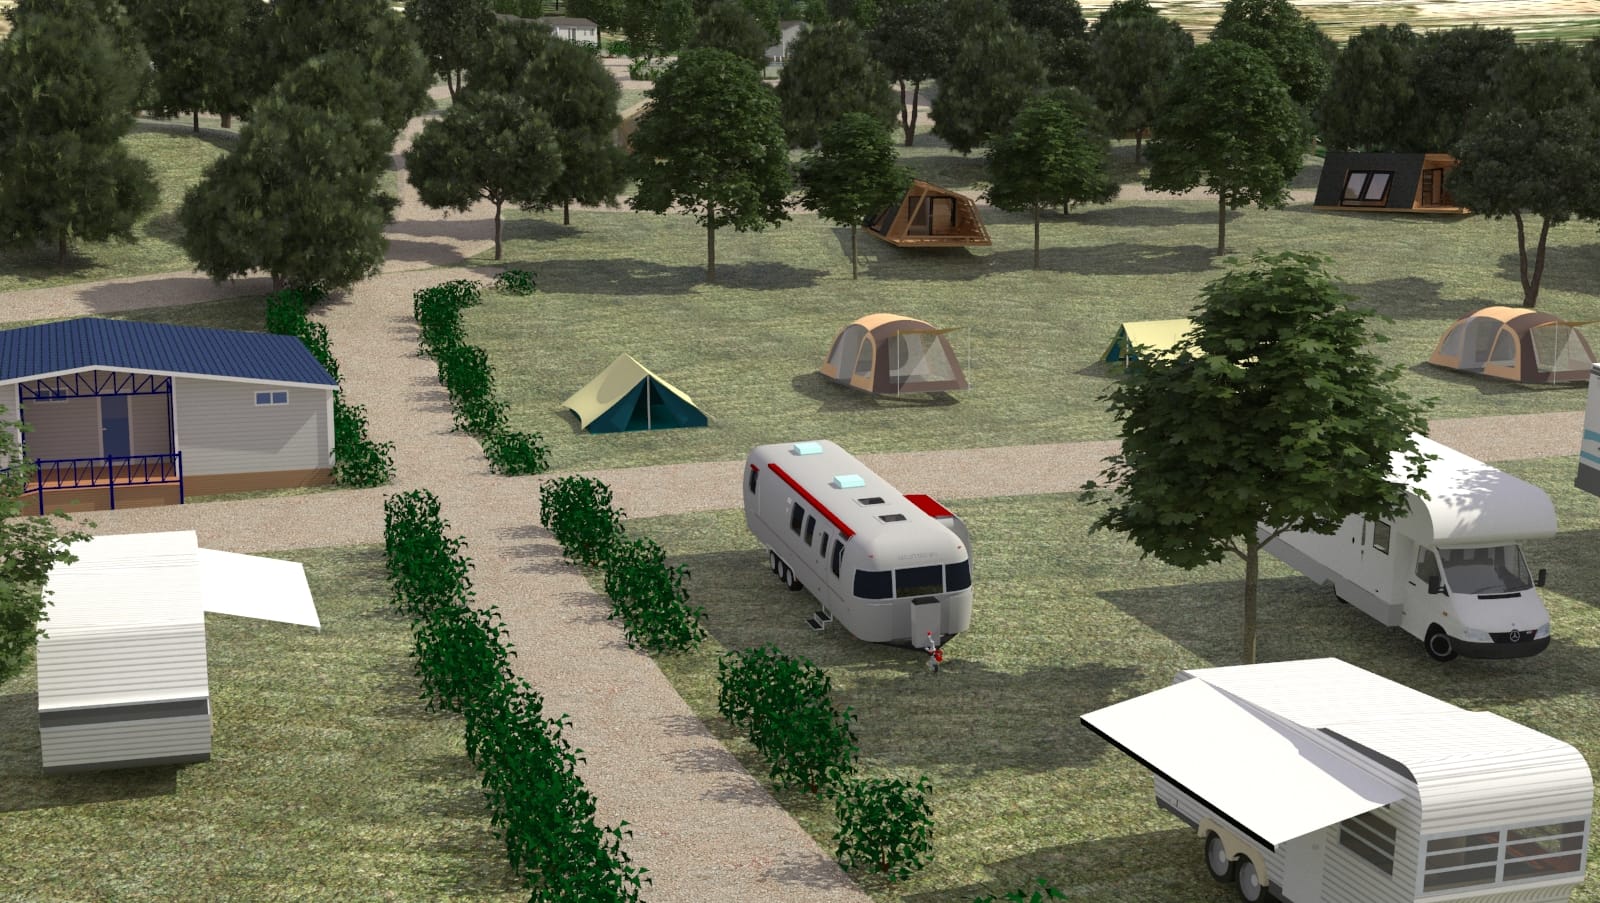 Campsite project